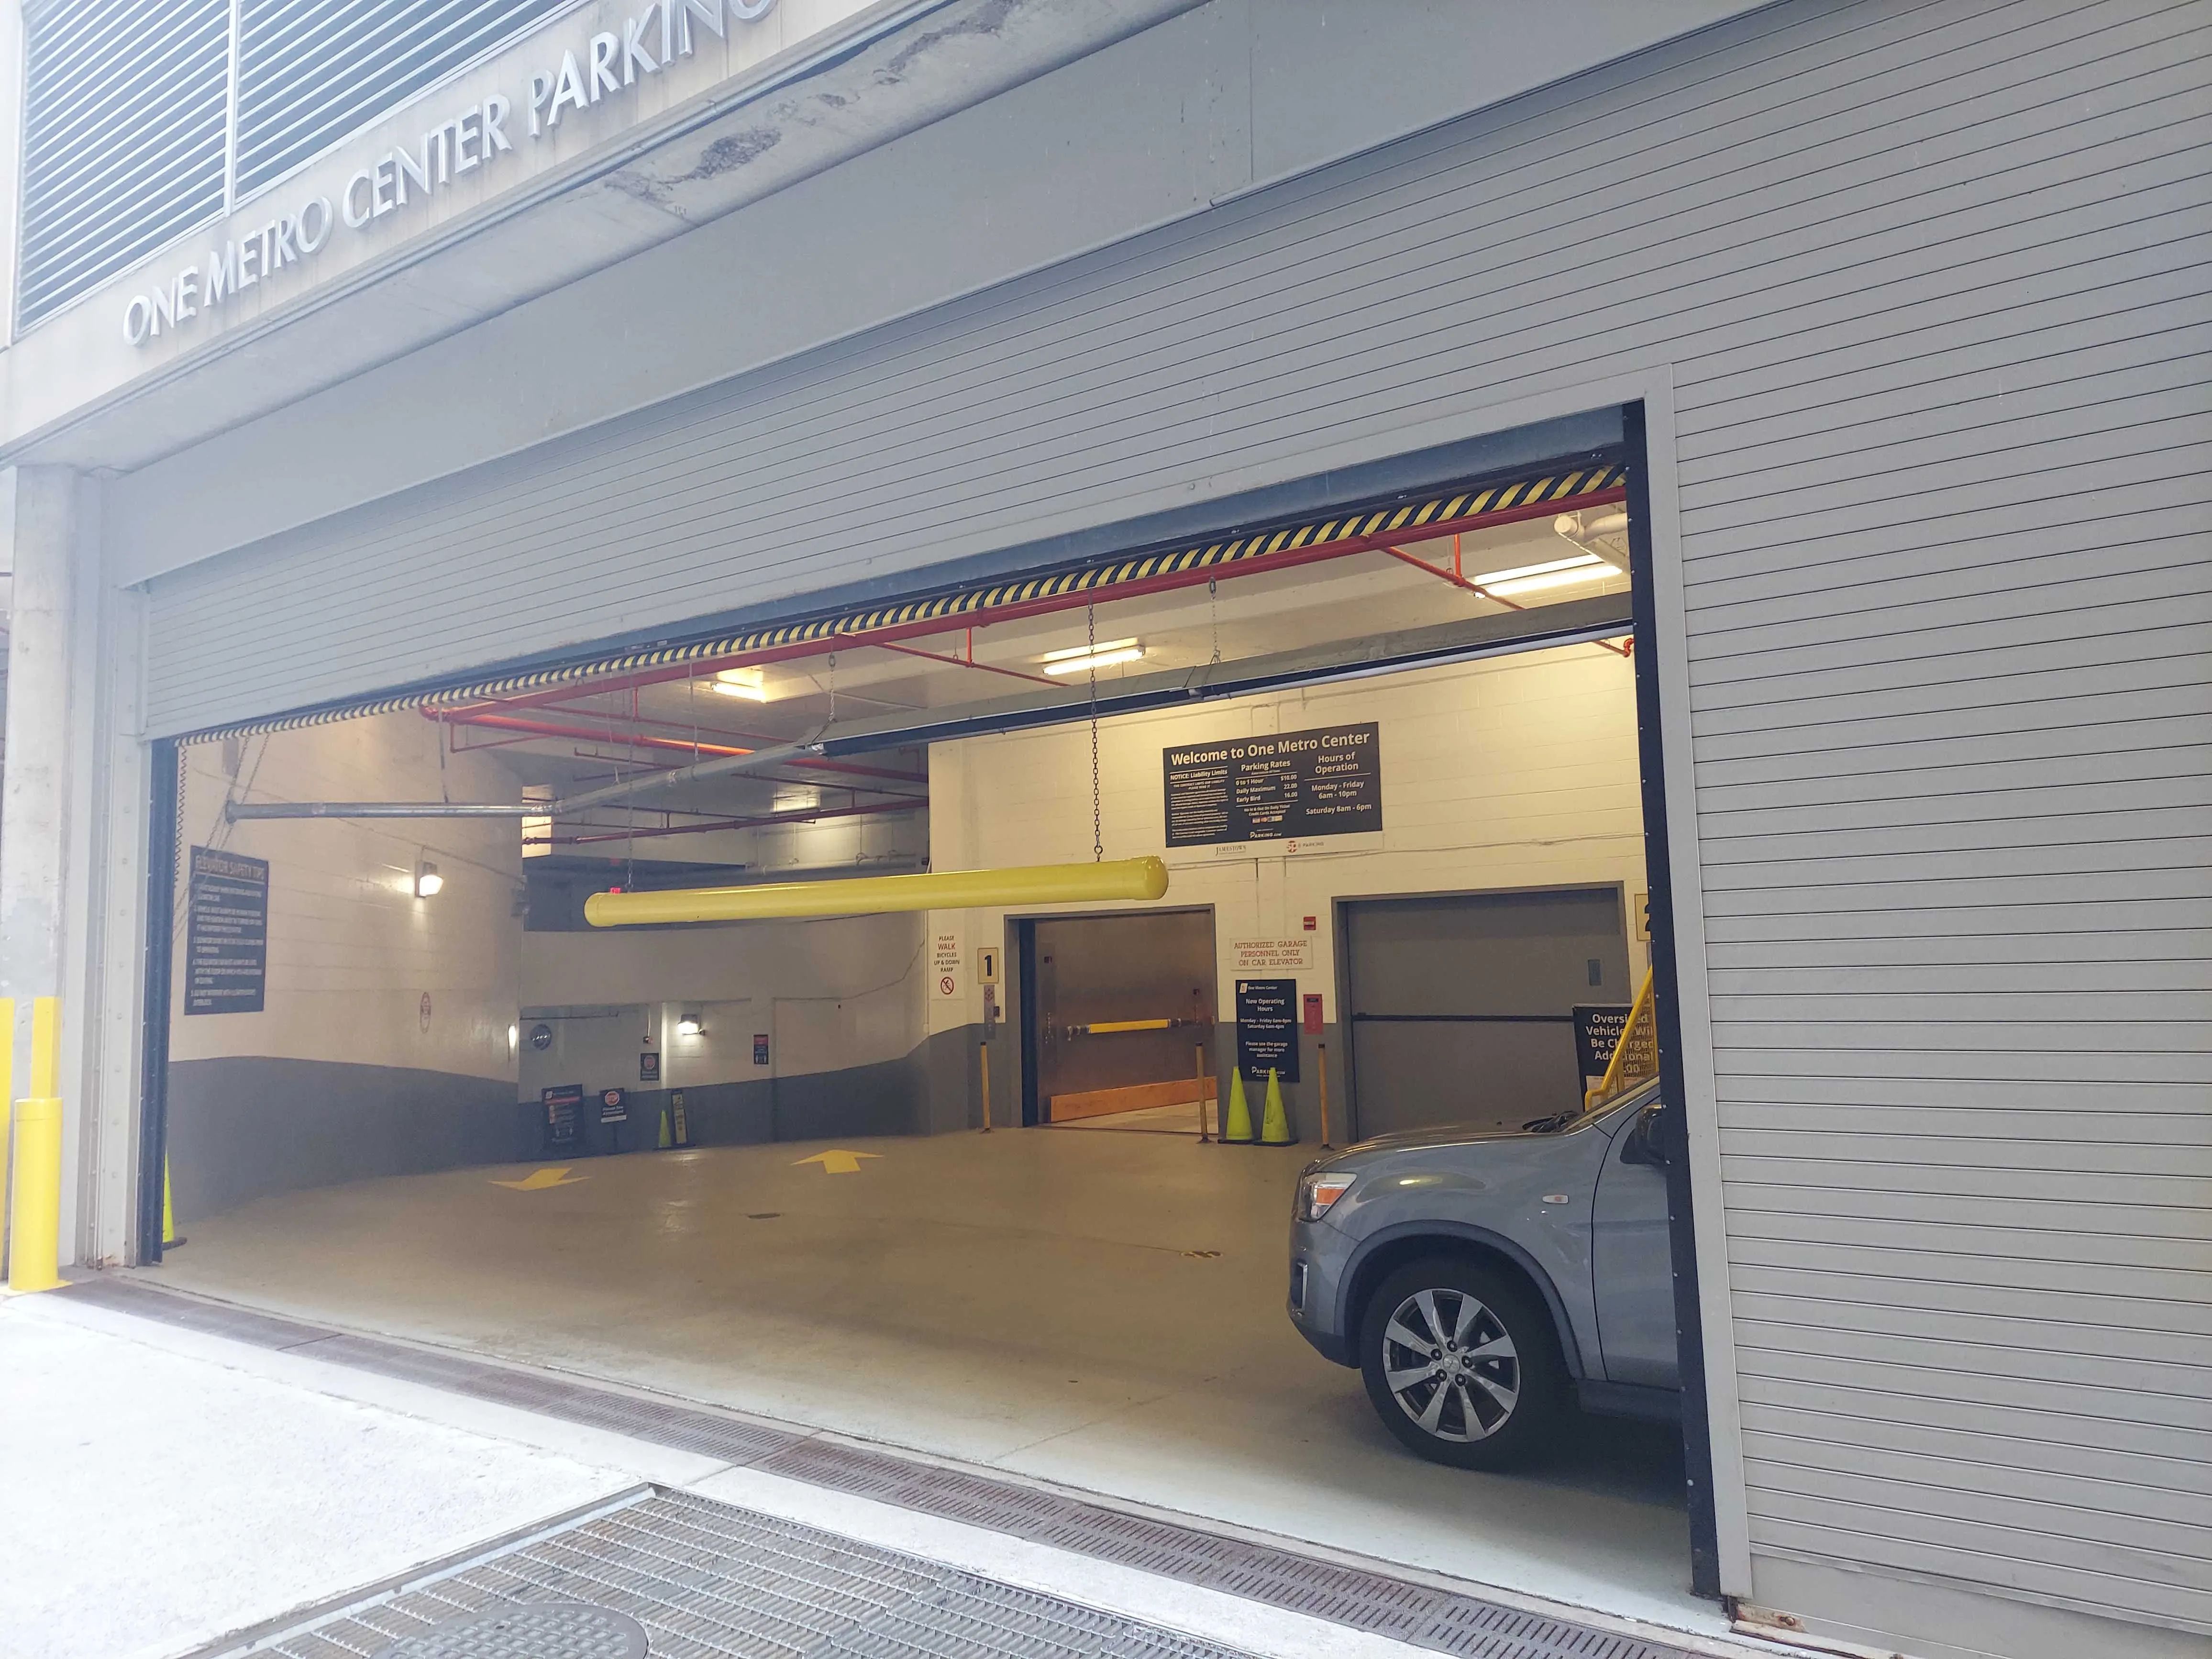 One Metro Center Garage, Washington Car Park